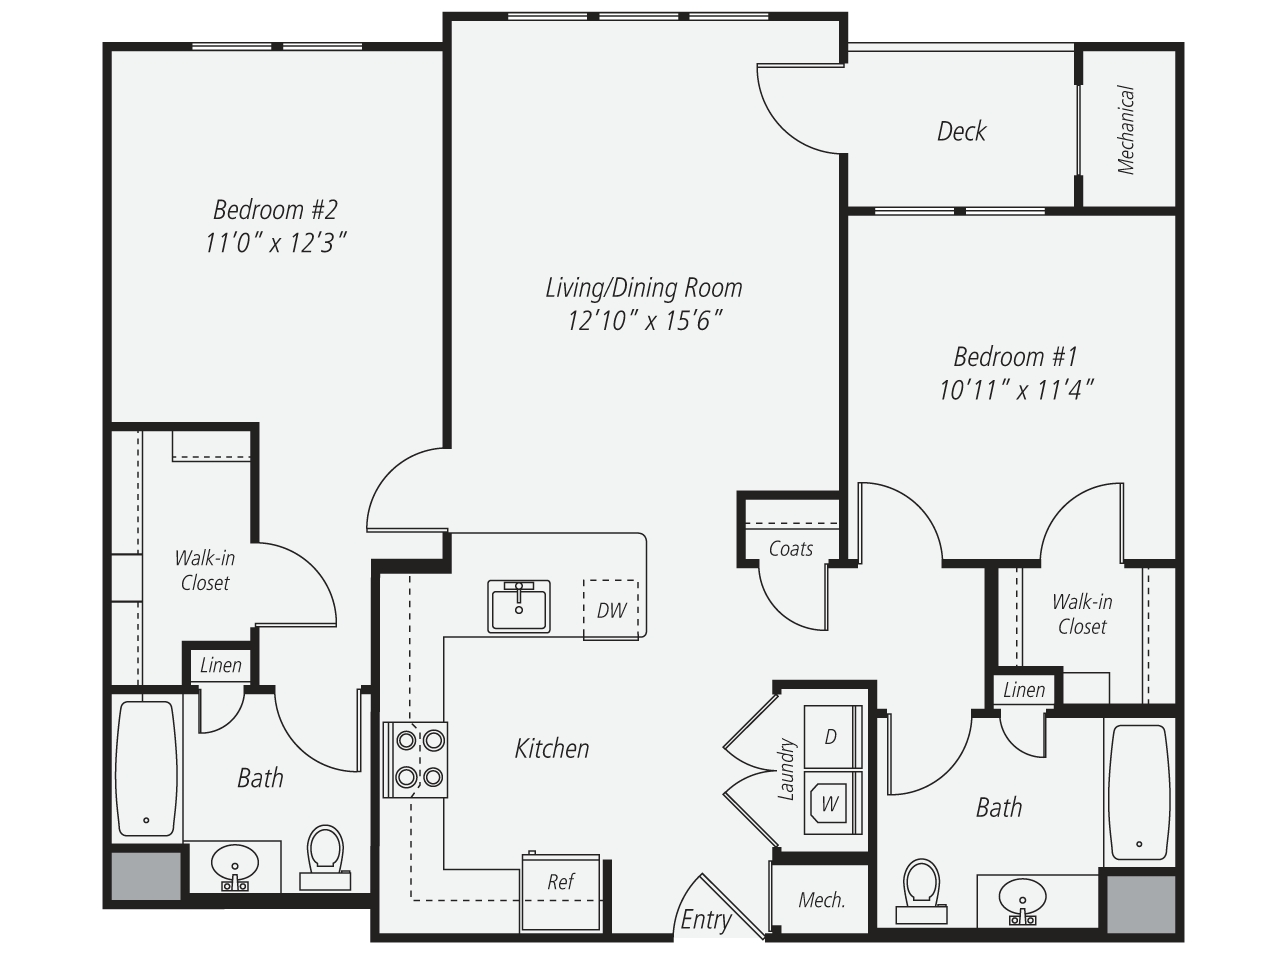 Floorplan for Apartment #323, 2 bedroom unit at Halstead Norwalk